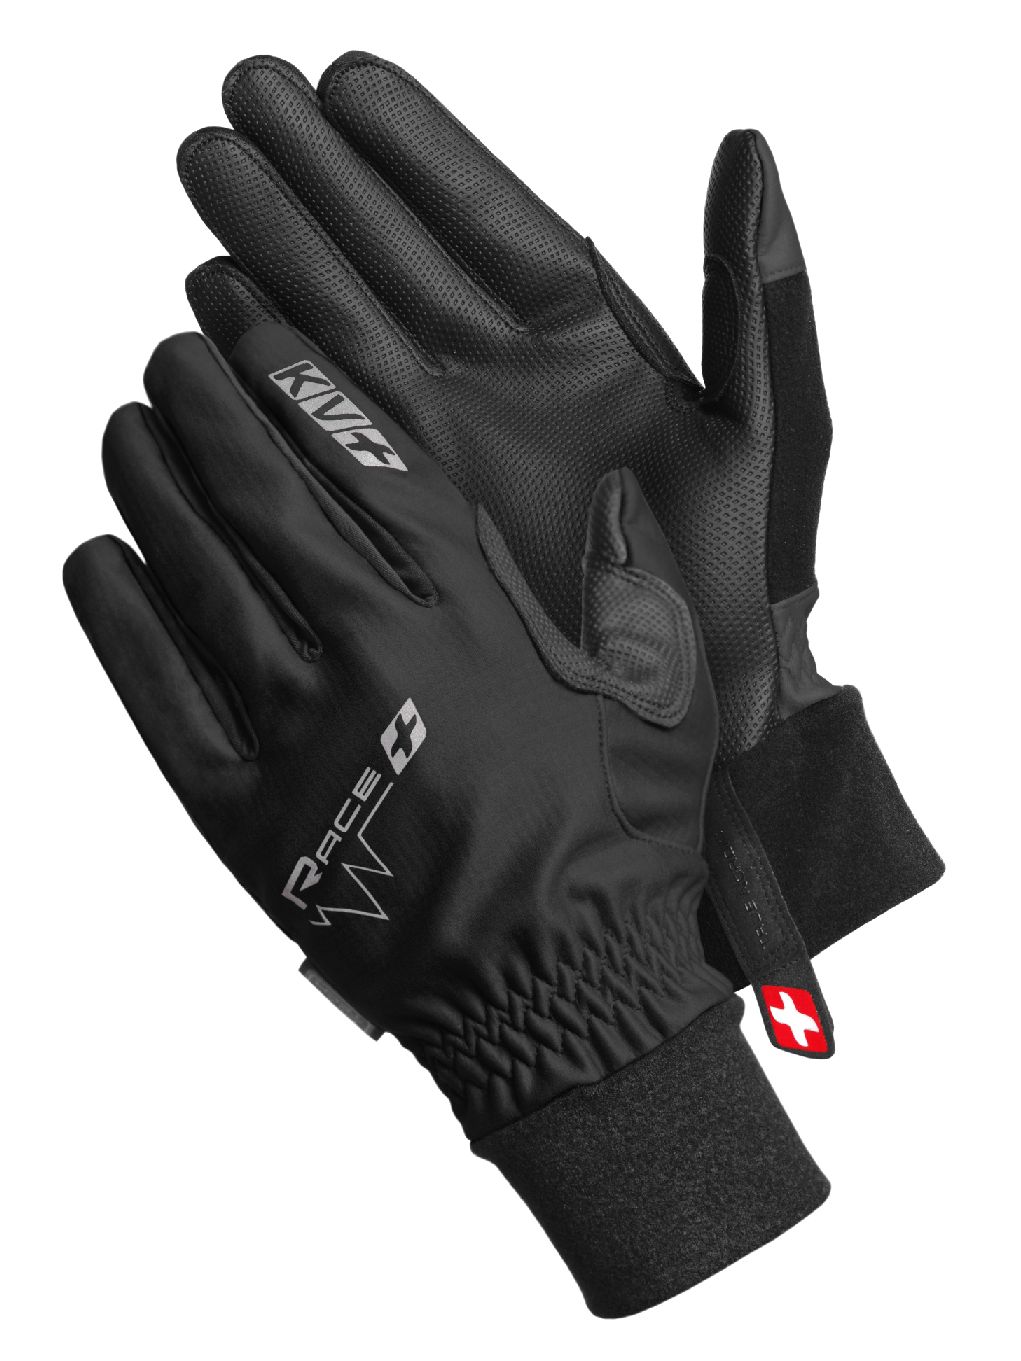 KV+ Перчатки лыжные XC RACE Black Артикул: 24G08.1